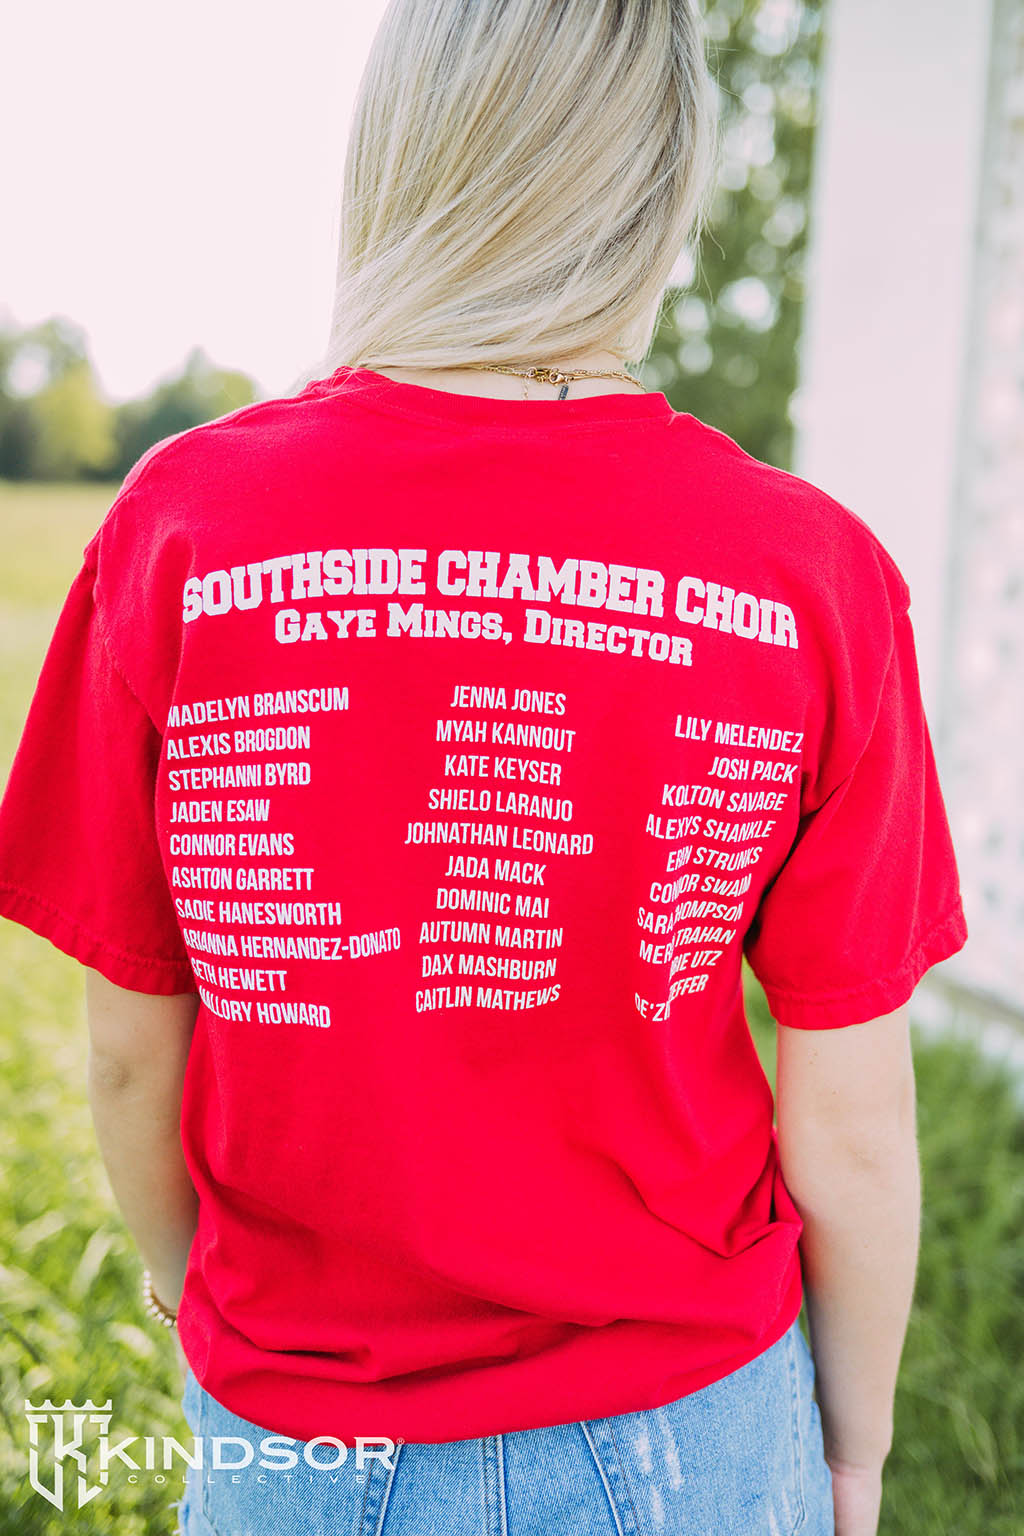 Southside Chamber Choir Tshirt